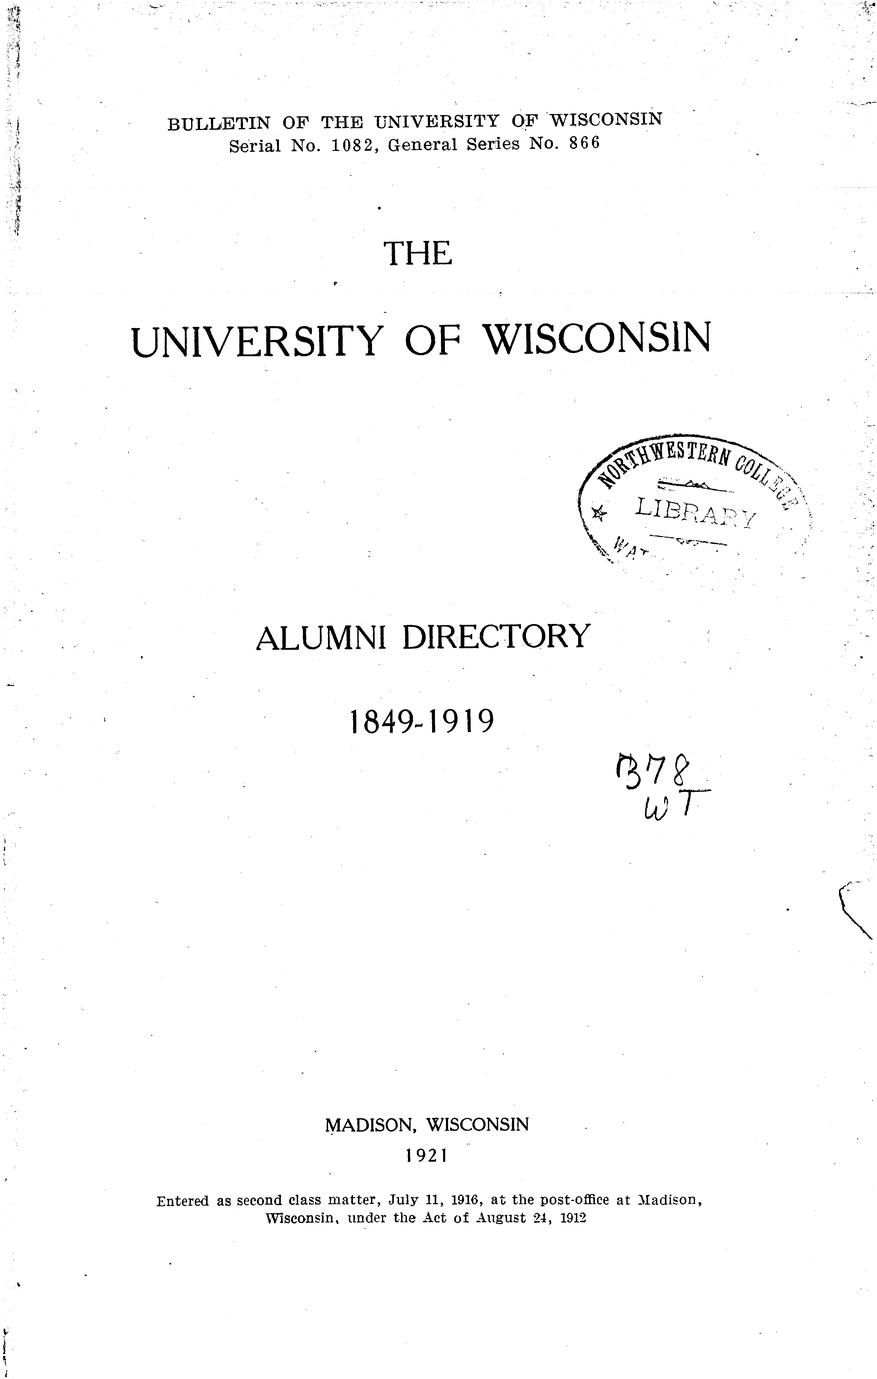 The University of Wisconsin alumni directory, 1849-1919 - Full view ...